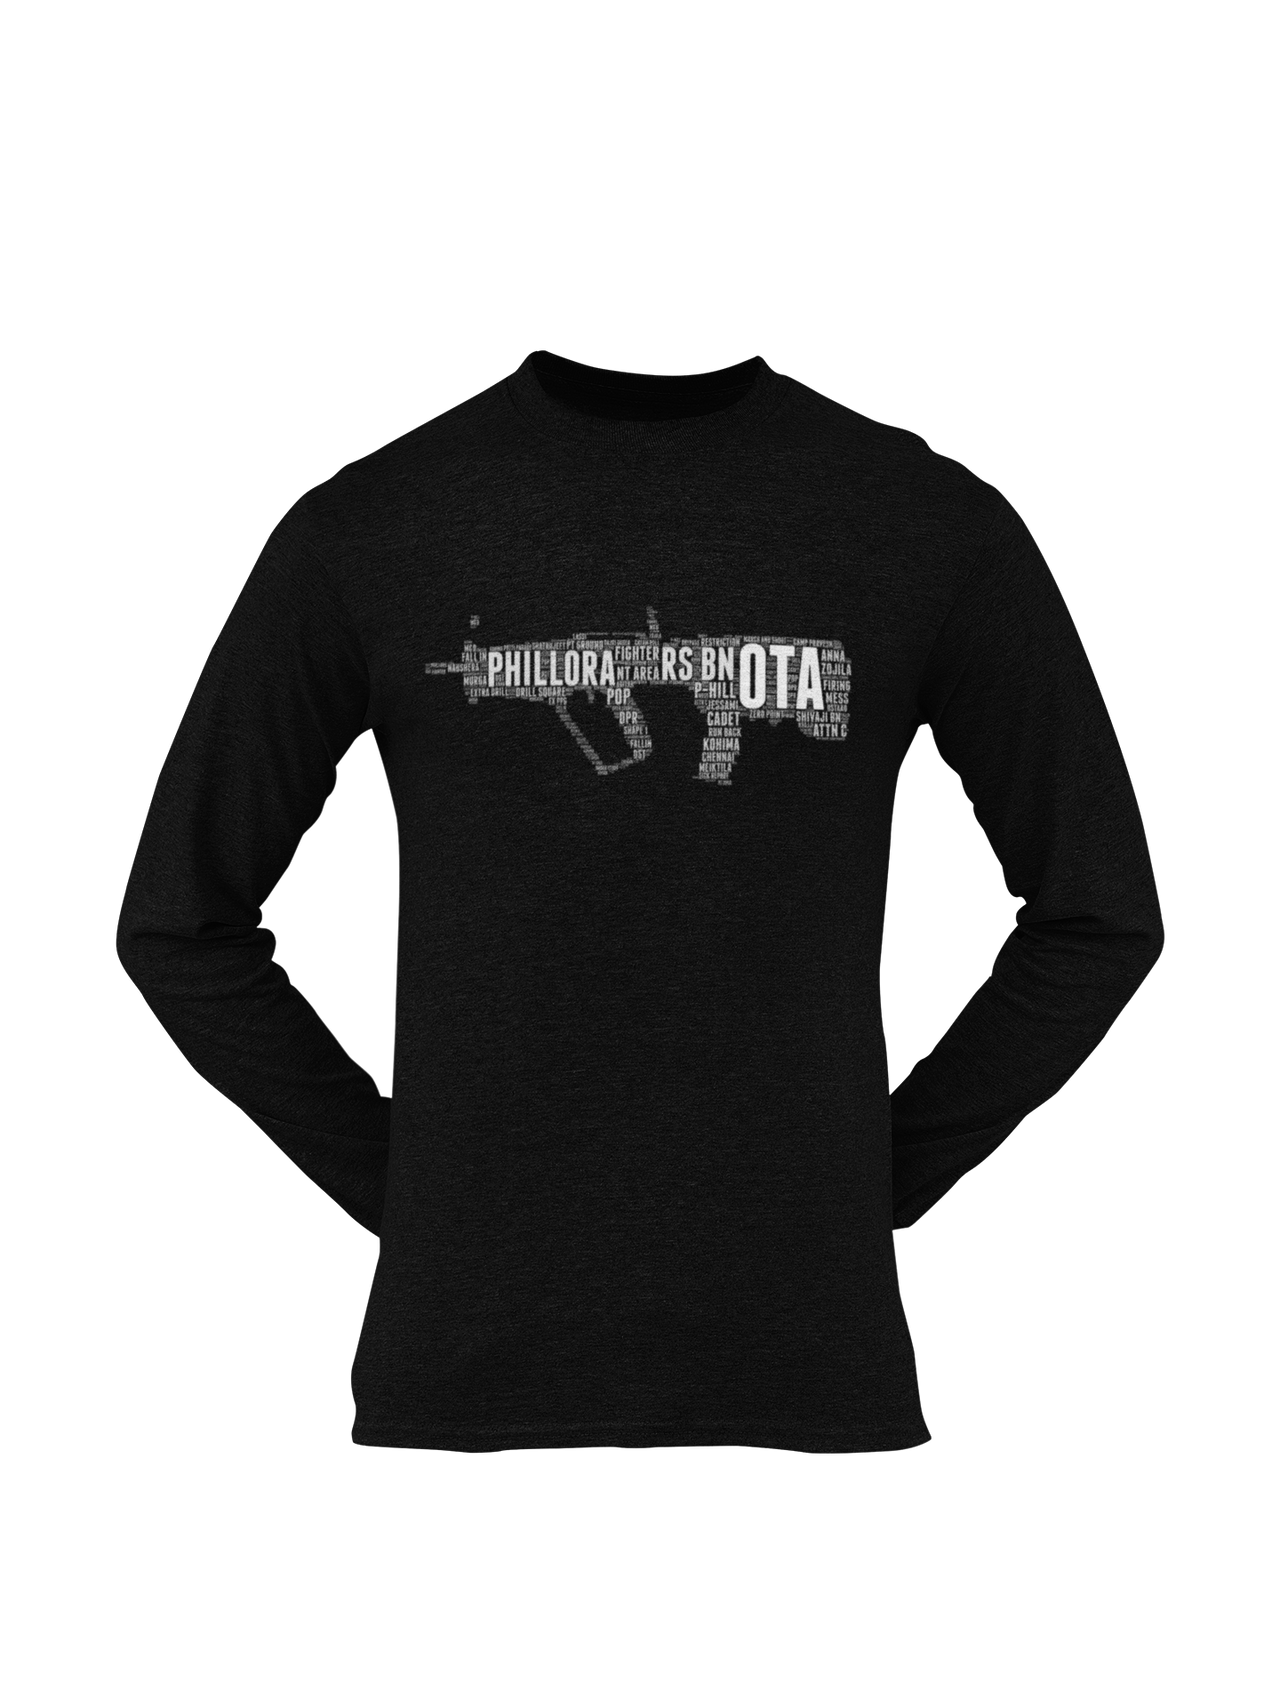 OTA T-shirt - Word Cloud Phillora - Tavor (Men)